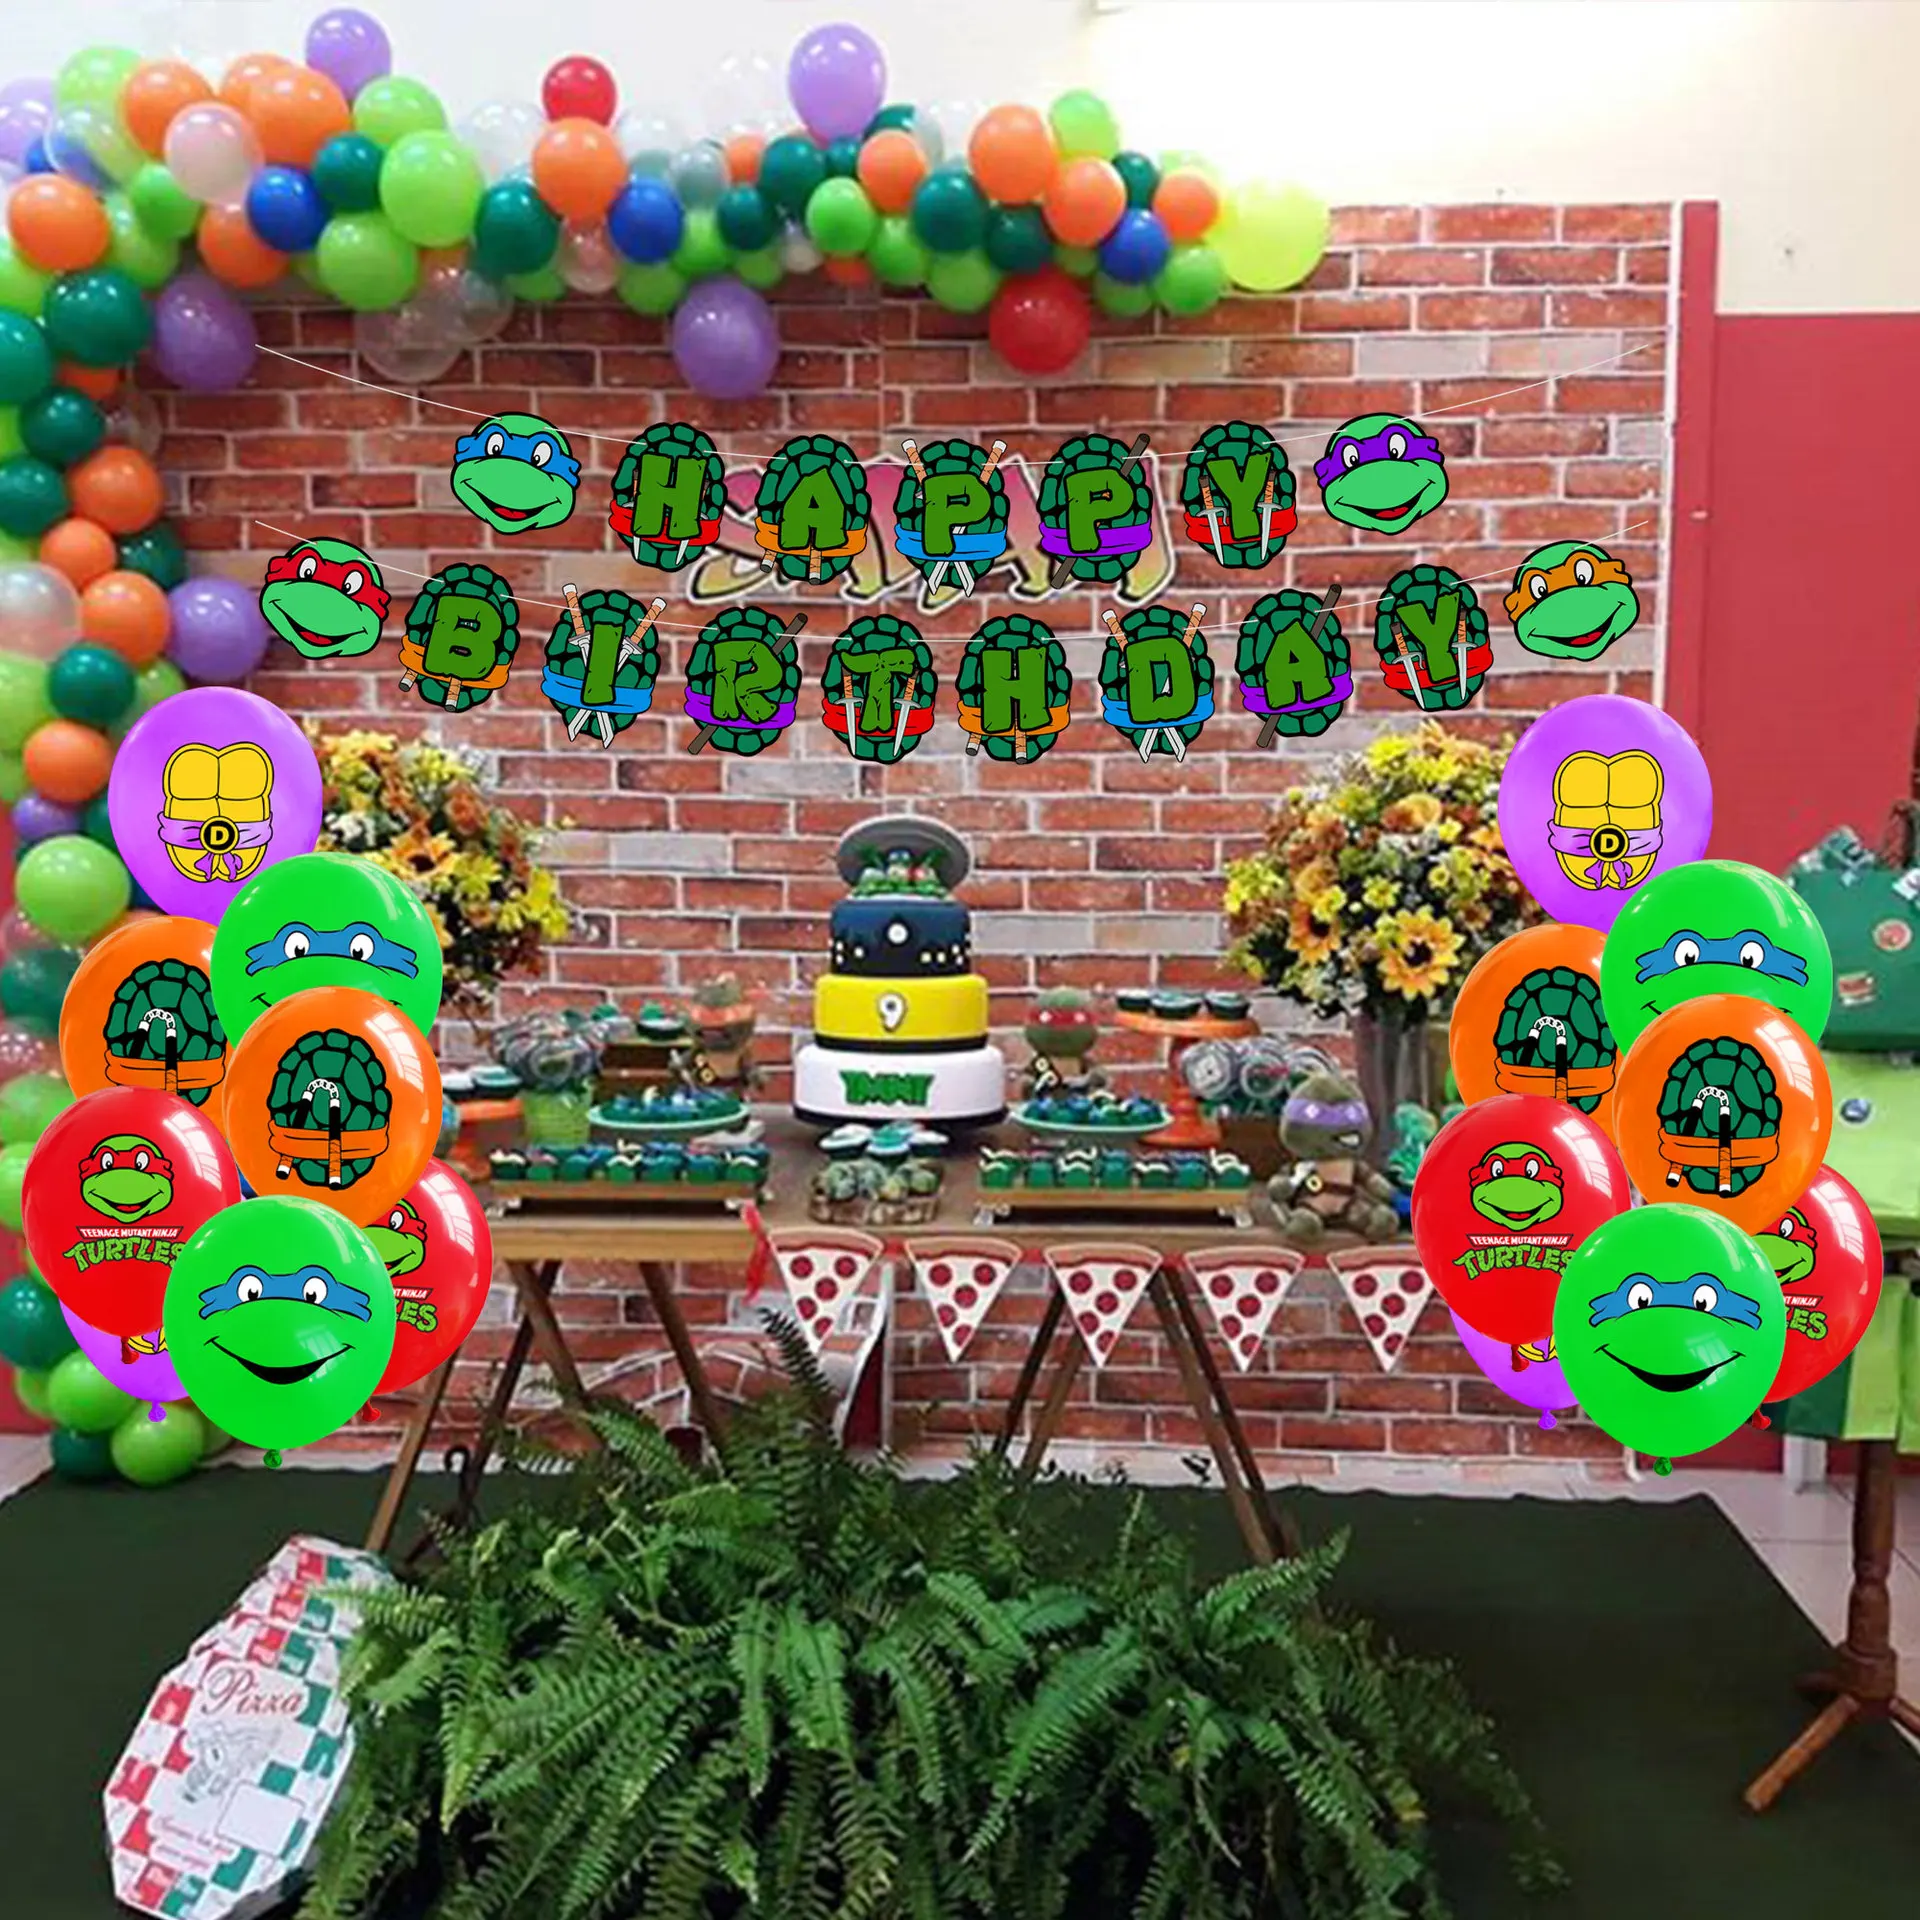 https://ae01.alicdn.com/kf/S10fccfbf12b94c11beba79db80ffd8c62/Teenage-Mutant-Ninja-Turtles-Party-Supplies-Banner-Balloons-Decorations-Kids-Birthday-TMNT-Party-Theme-Favors-Boy.jpg